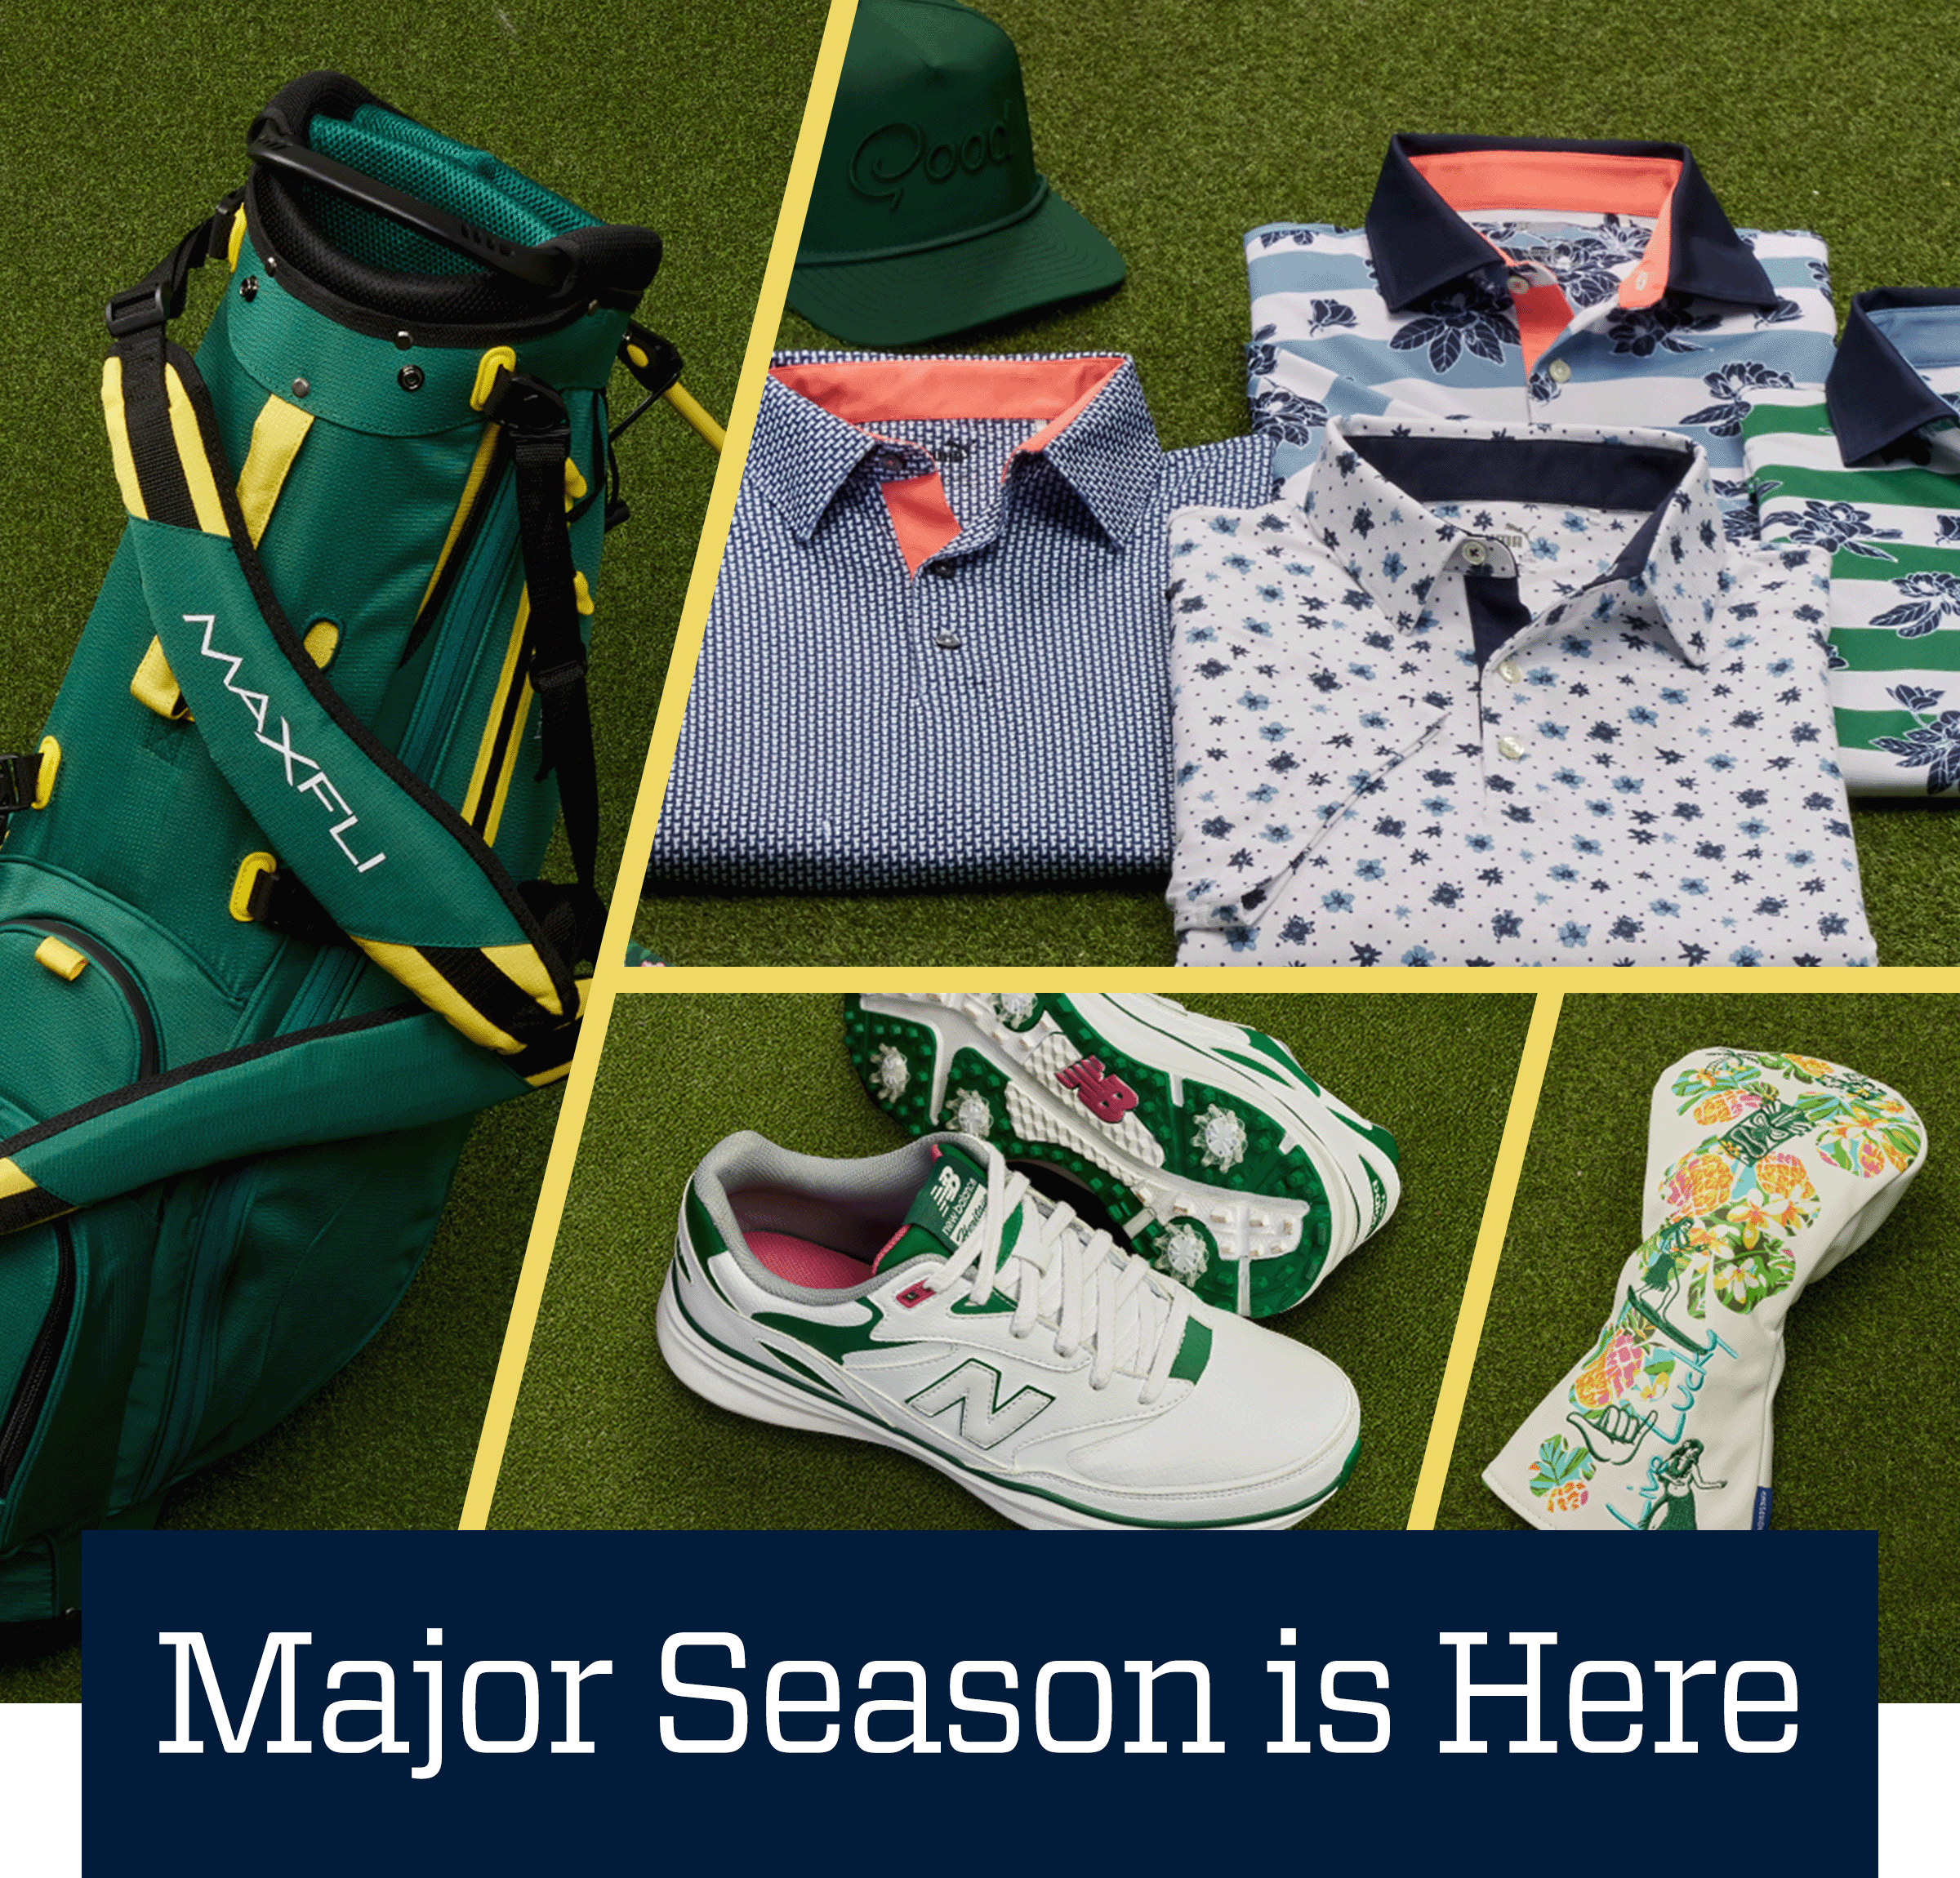  Major season is here.